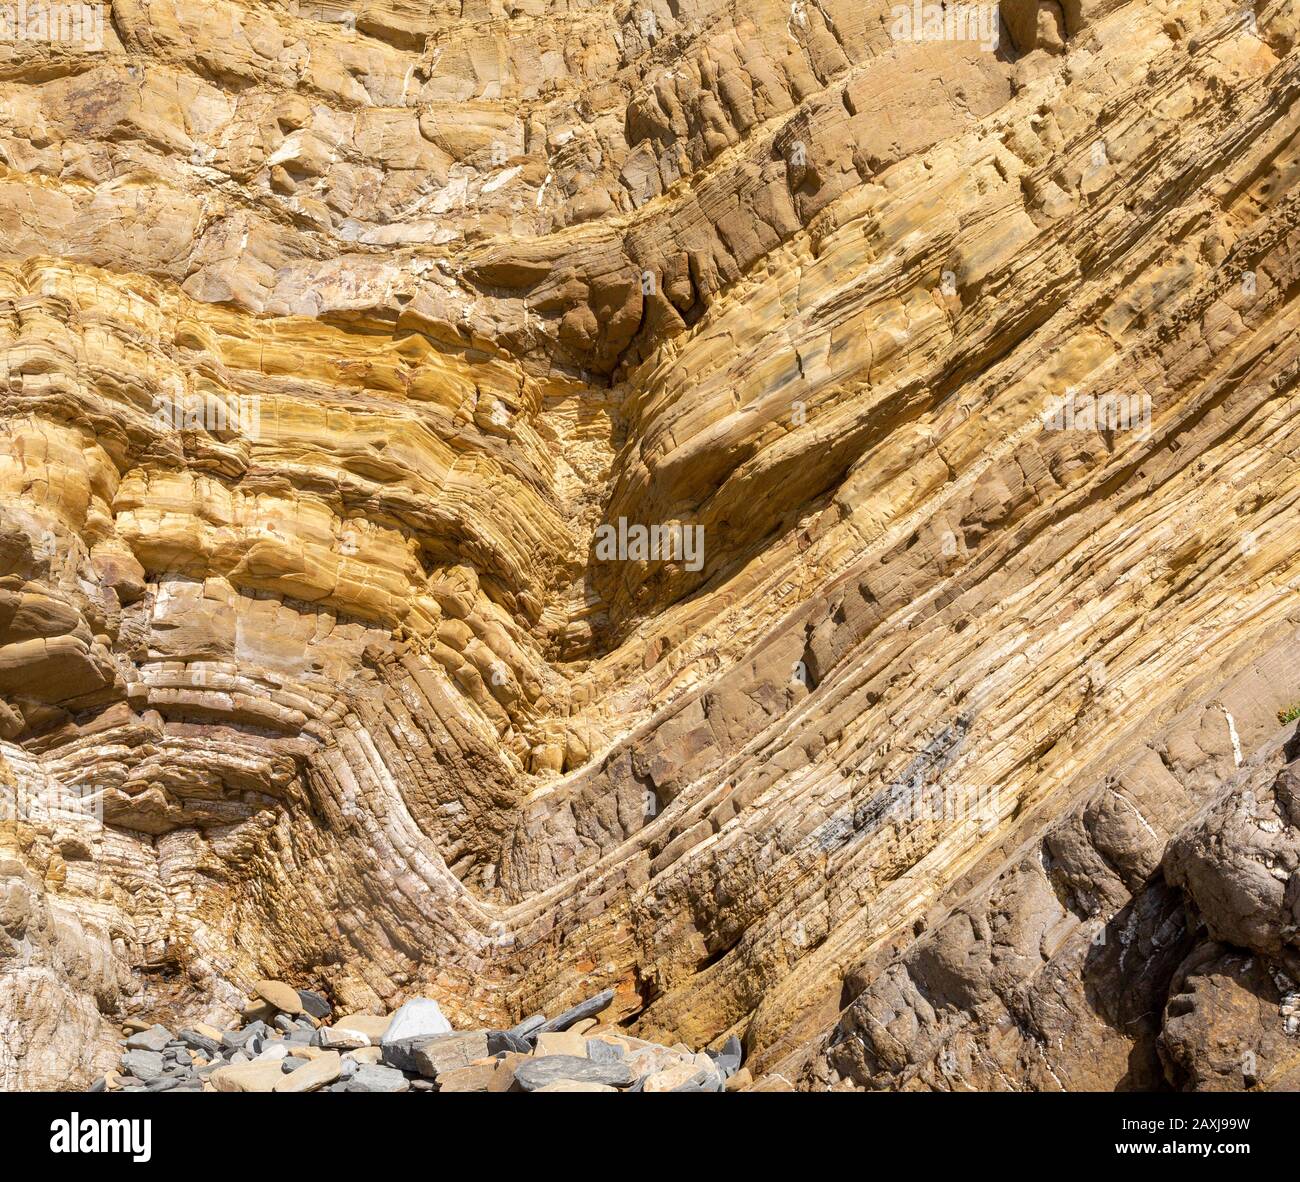 Strata of sandstone sedimentary rock  coastal cliff layers folded geological syncline structure, Zambujeiro do Mar, Alentejo Littoral, Portugal Stock Photo